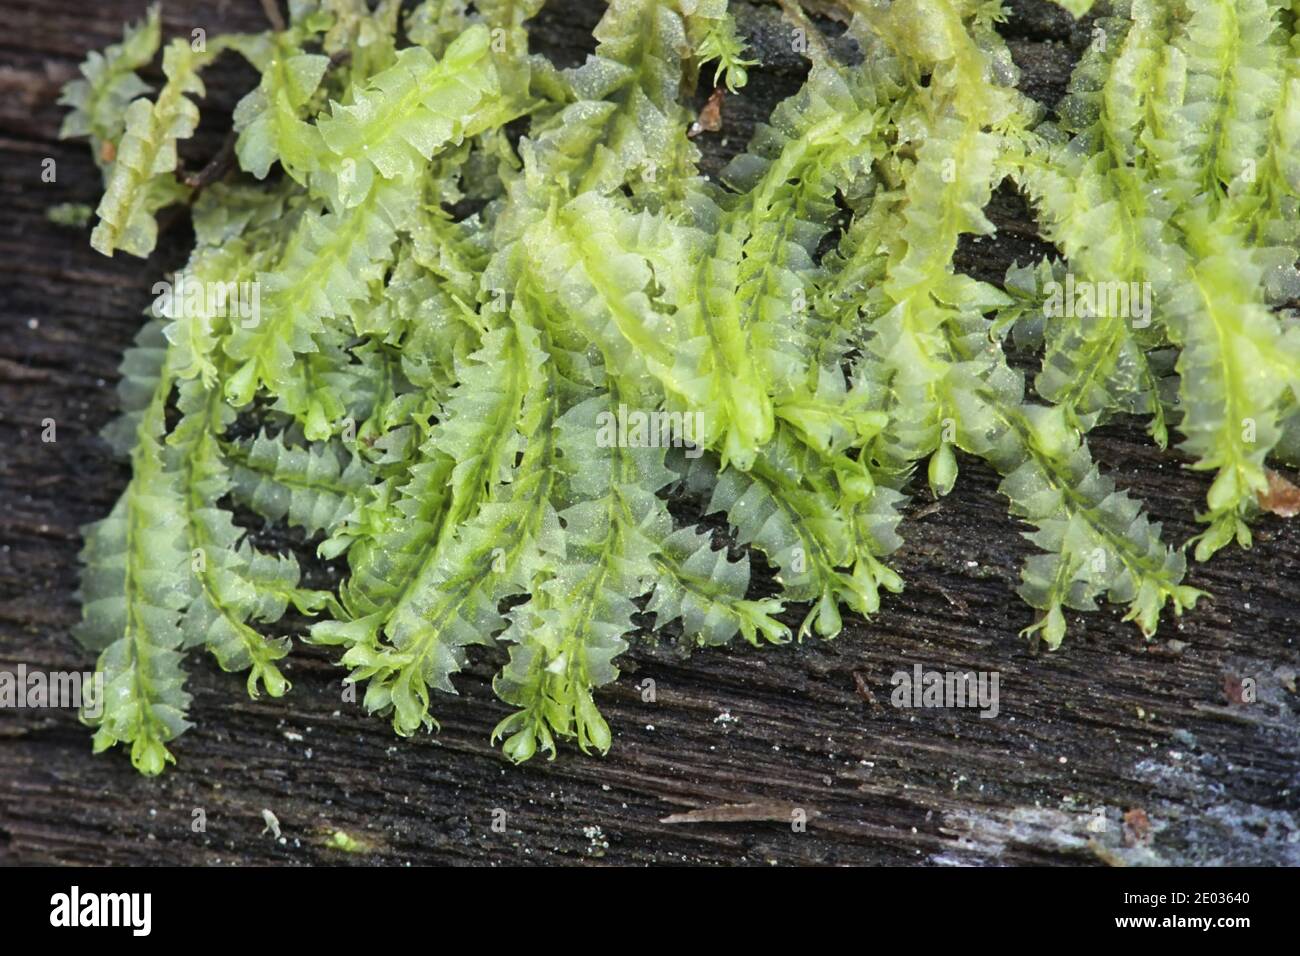 Lophocolea heterophylla, the variable-leaved crestwort, a liverwort from Finland Stock Photo